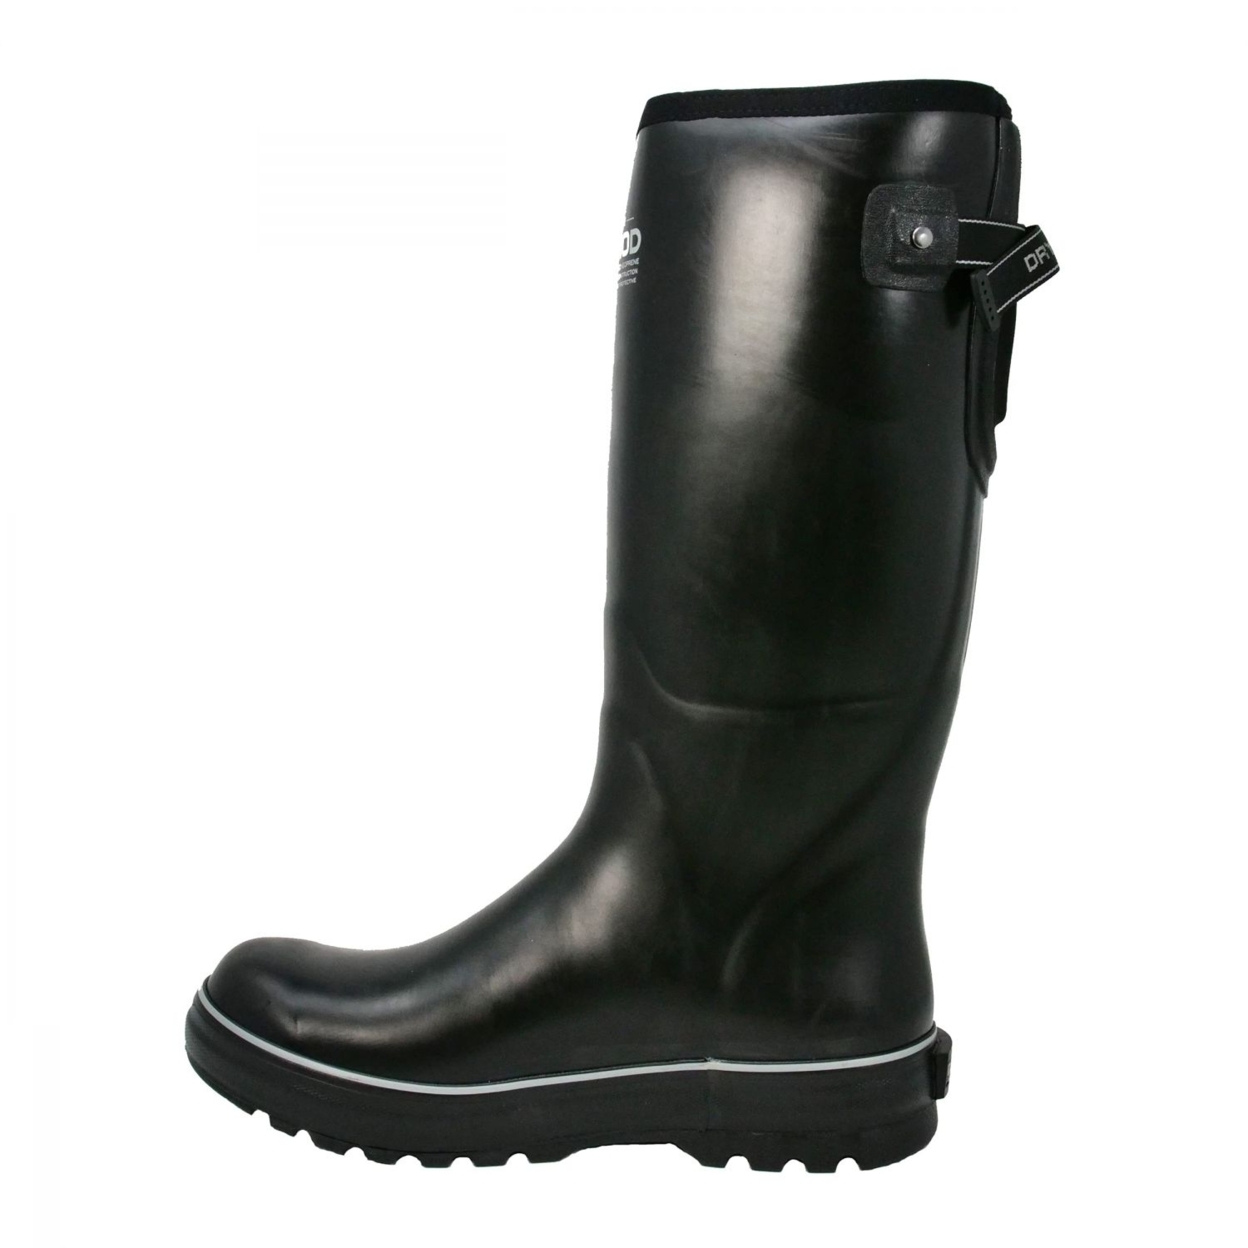 Dryshod Men's Mudslinger Gusset Premium Rubber Farm Boots Black/Grey - MDG-MH-BK ONE SIZE BLACK/GREY - BLACK/GREY, 8